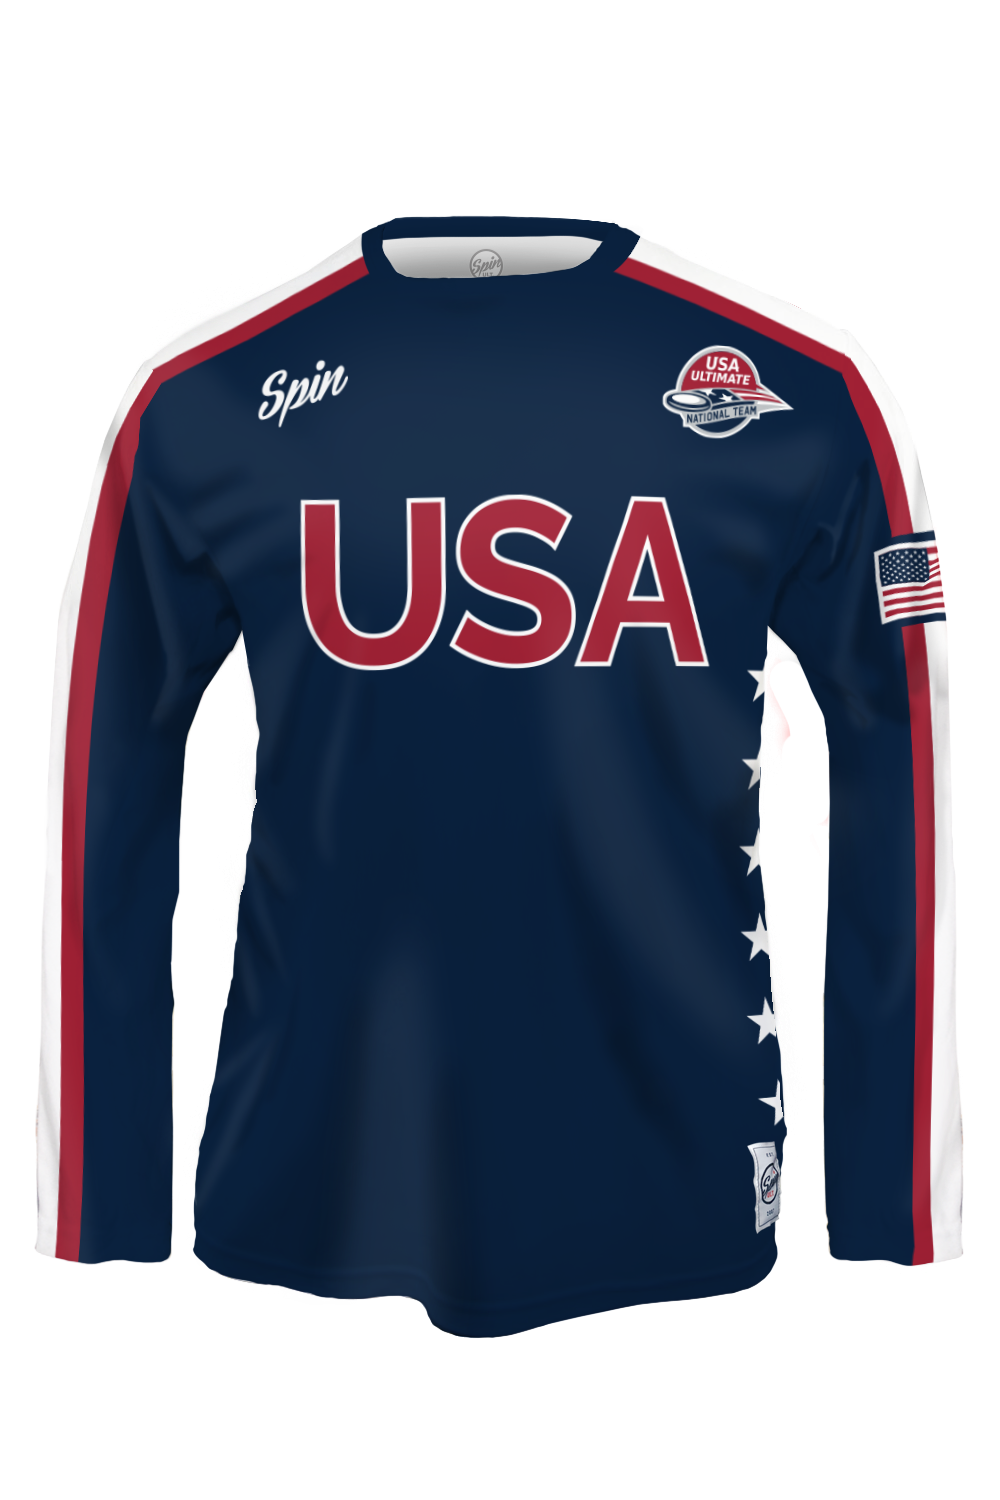 U.S. National Team Gear - Team USA Uniforms | Spin Ultimate